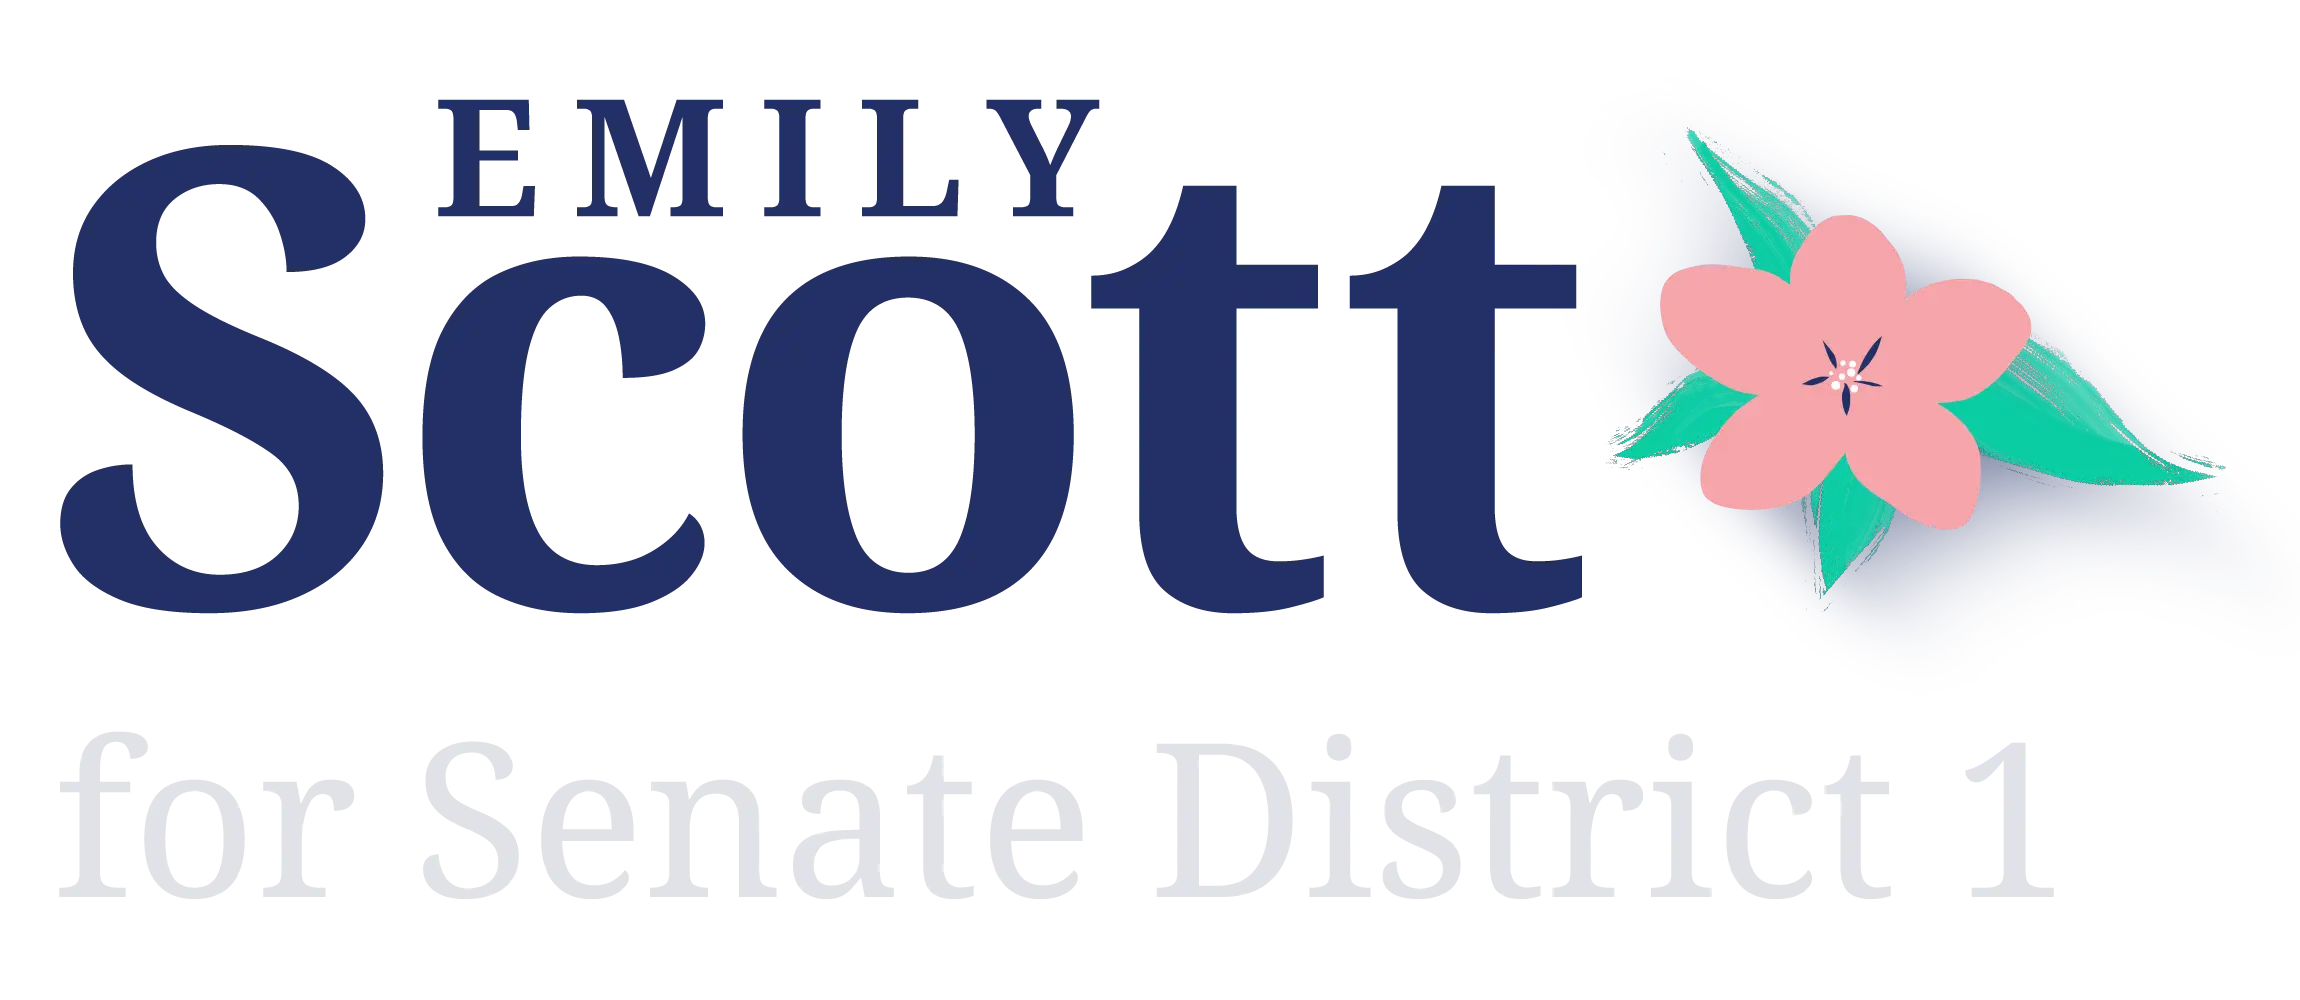 Emily Scott for Senate District 1